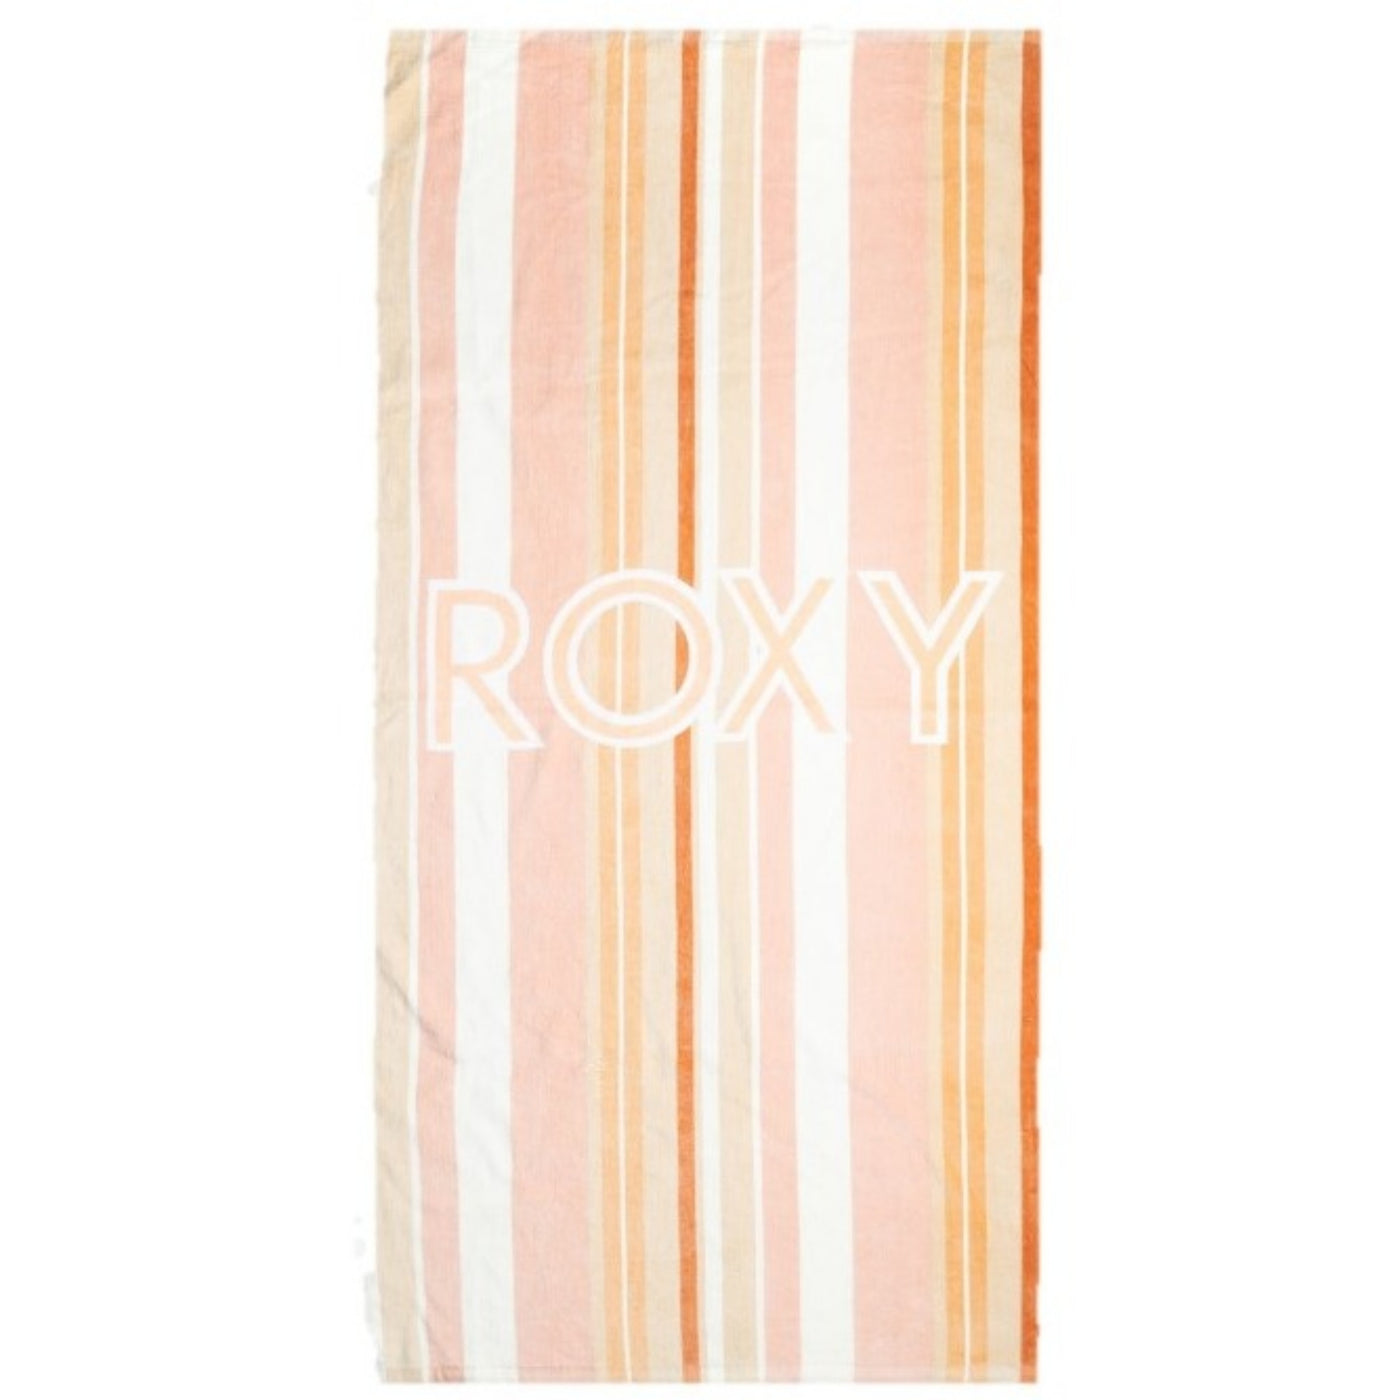 Roxy Fun And Adventure Towel - Cork Monochromatic Stripe